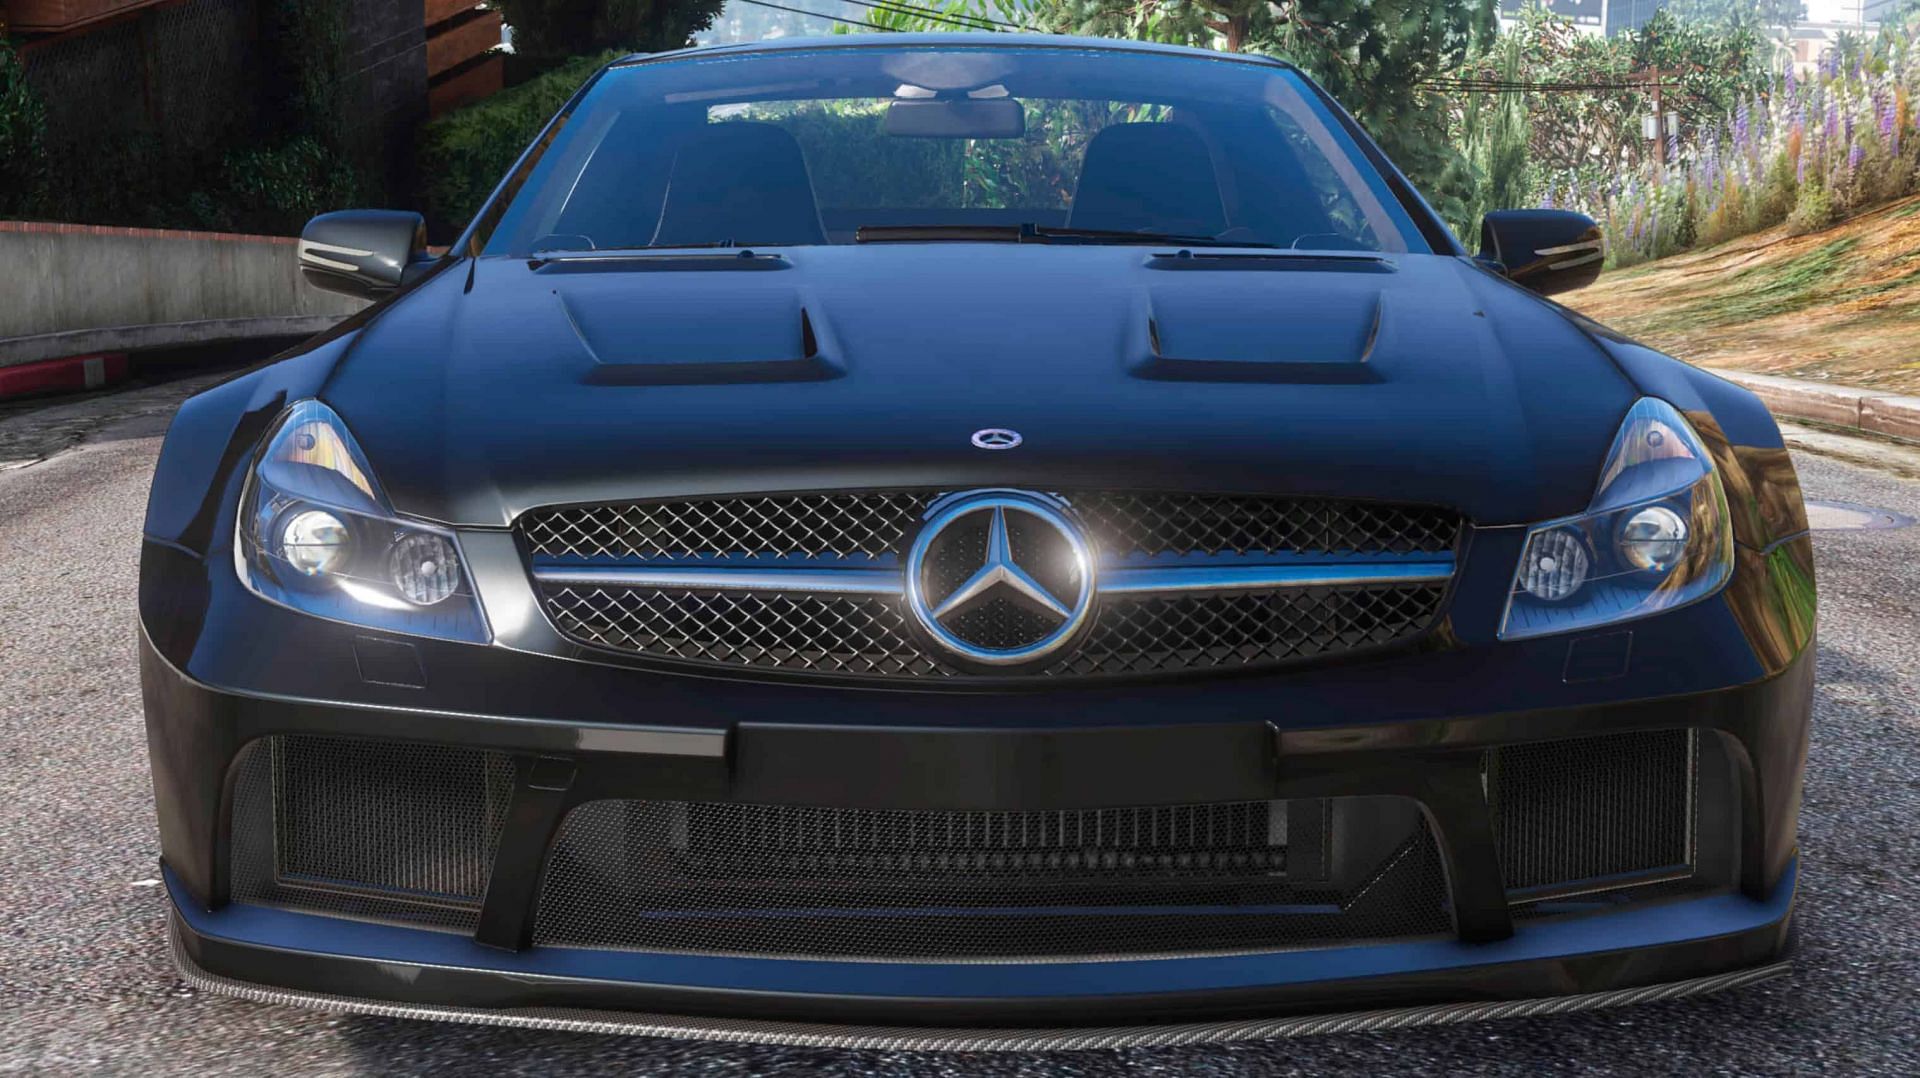 A Mercedes-Benz AMG car in GTA V is a blessing [Image via gta5modhub]